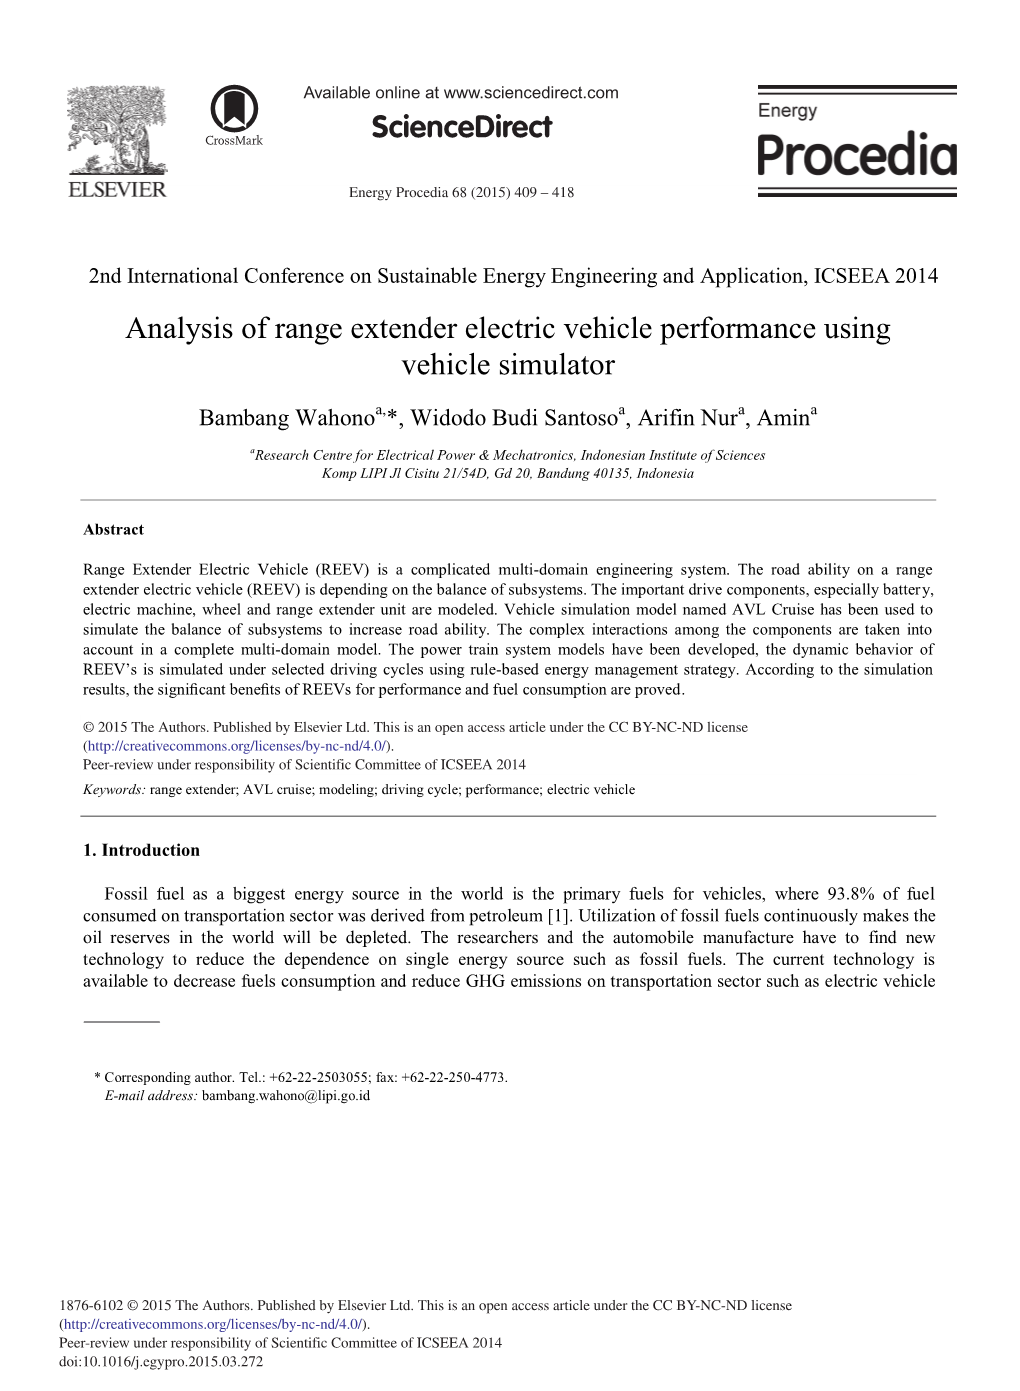 Analysis of Range Extender Electric Vehicle Performance Using Vehicle Simulator